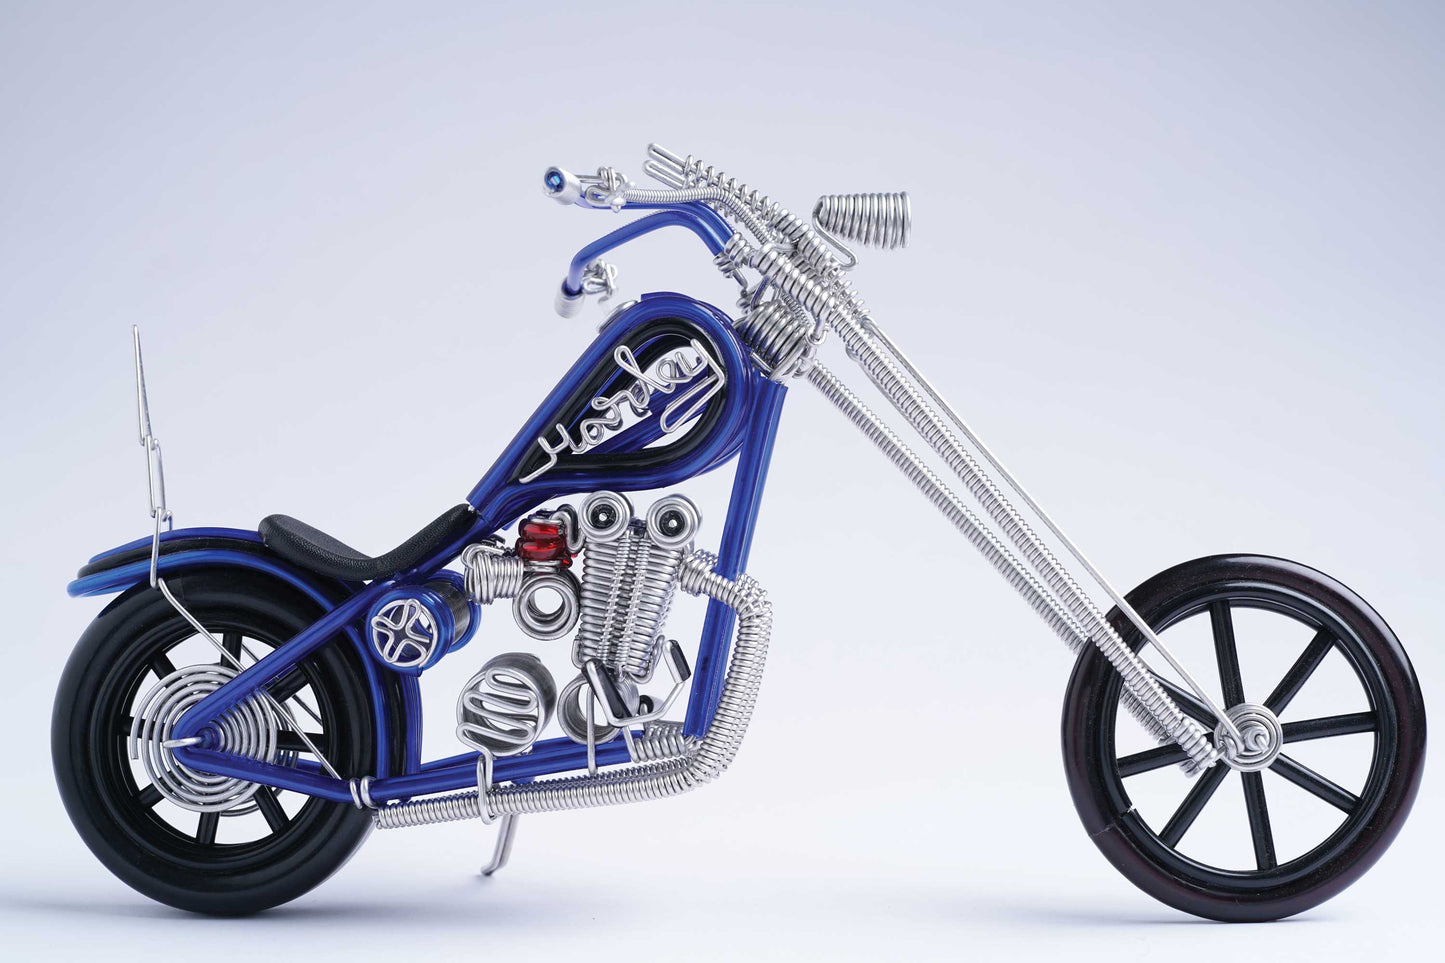 hand-crafted Wire-art Harley Bike